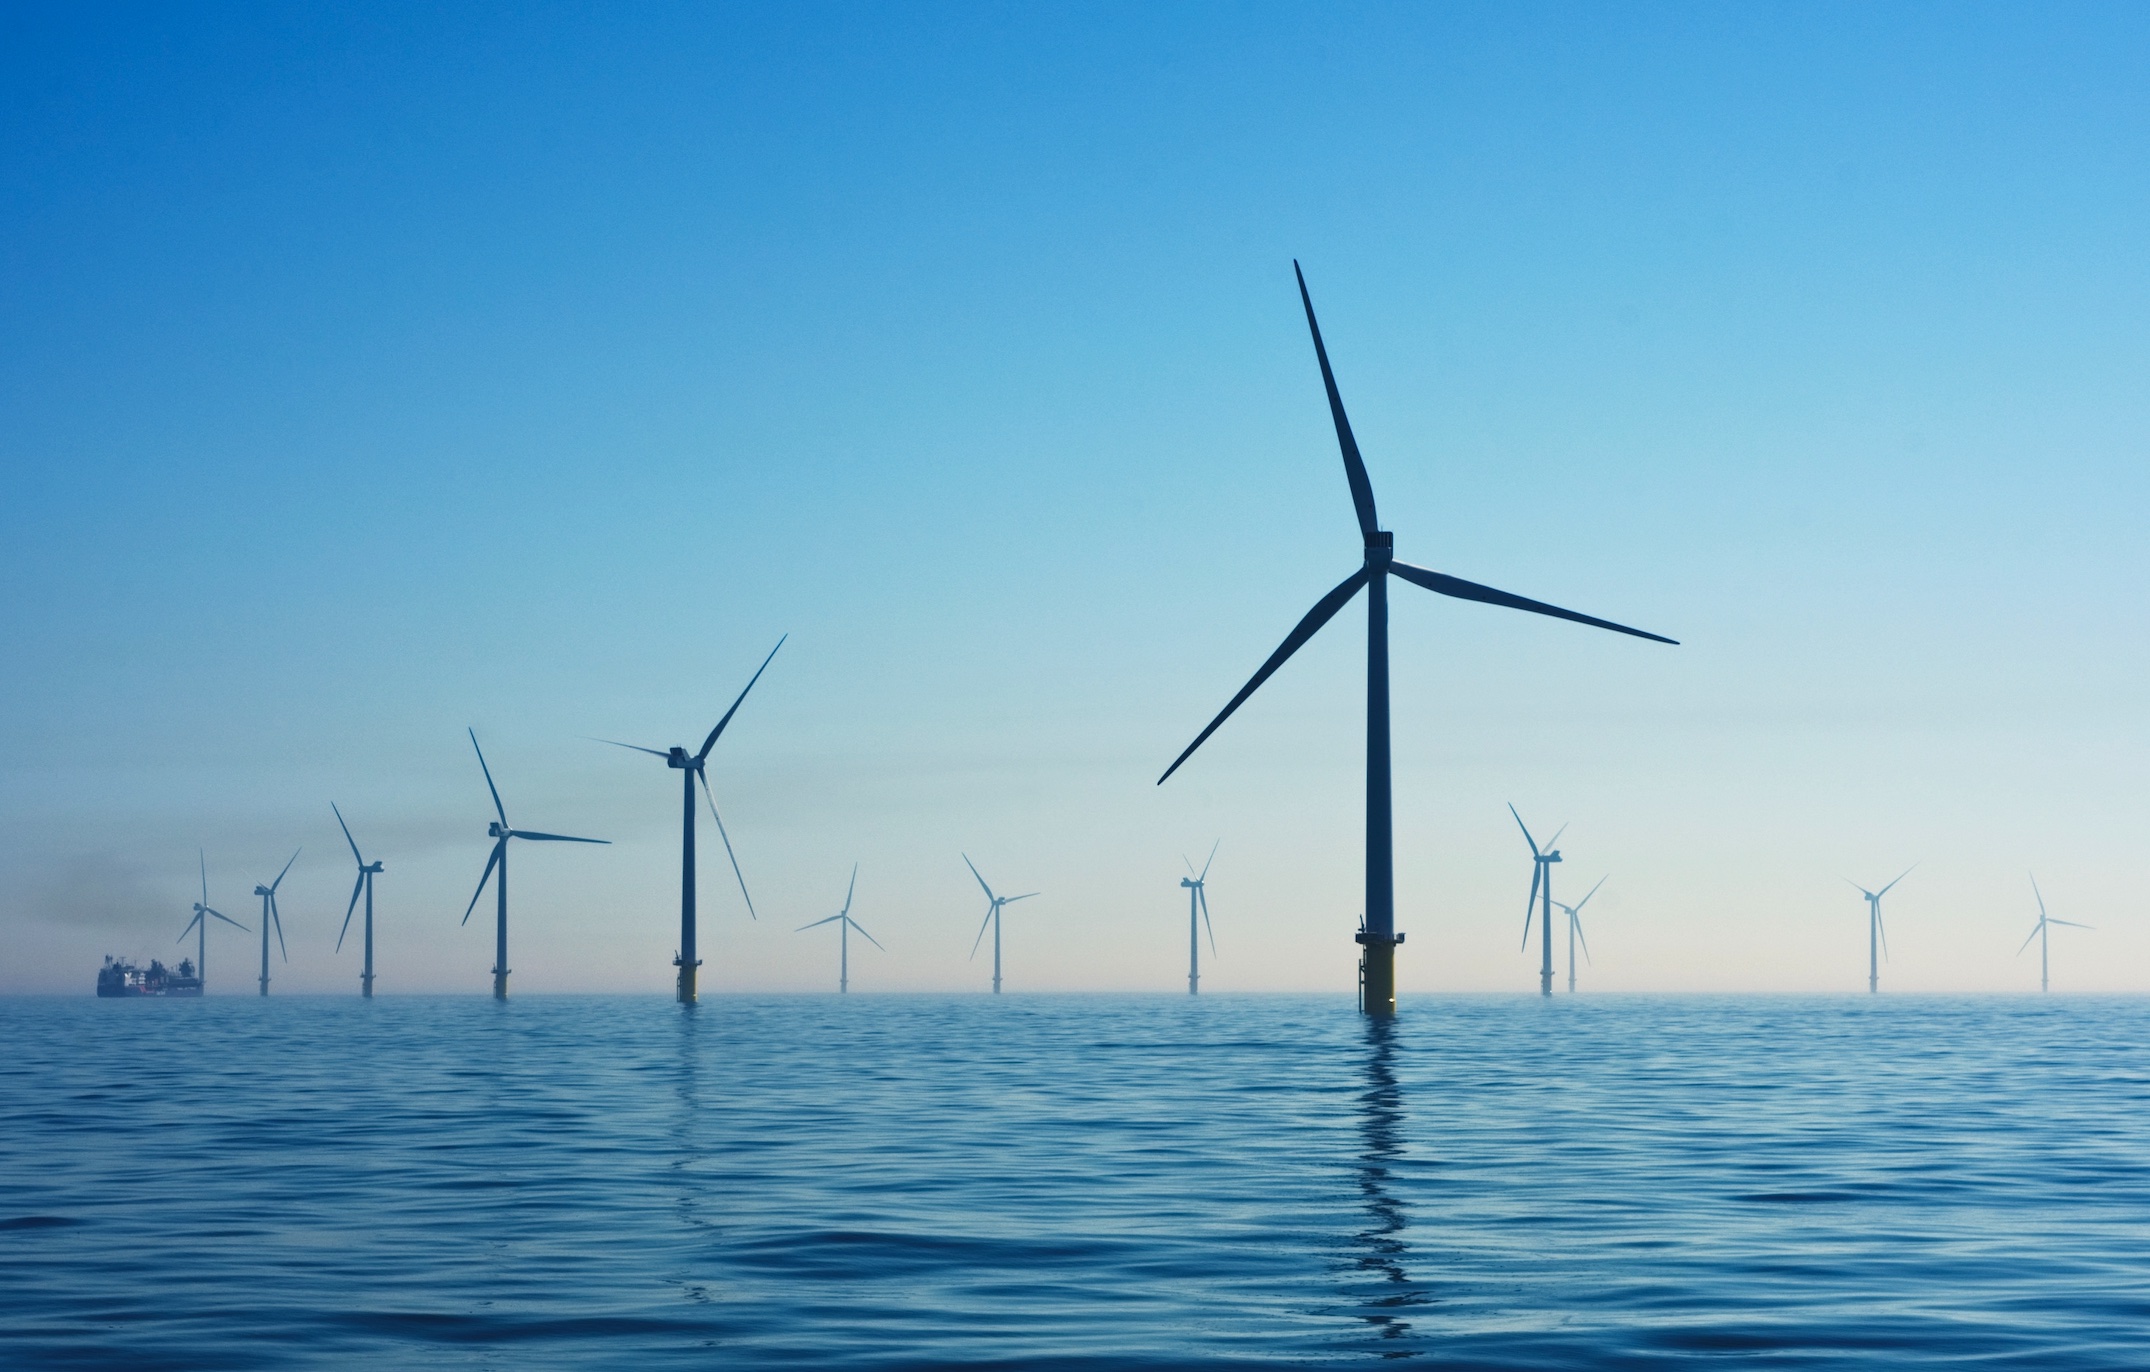 Offshore windmills; image by Nicholas Doherty, via Unsplash.com.